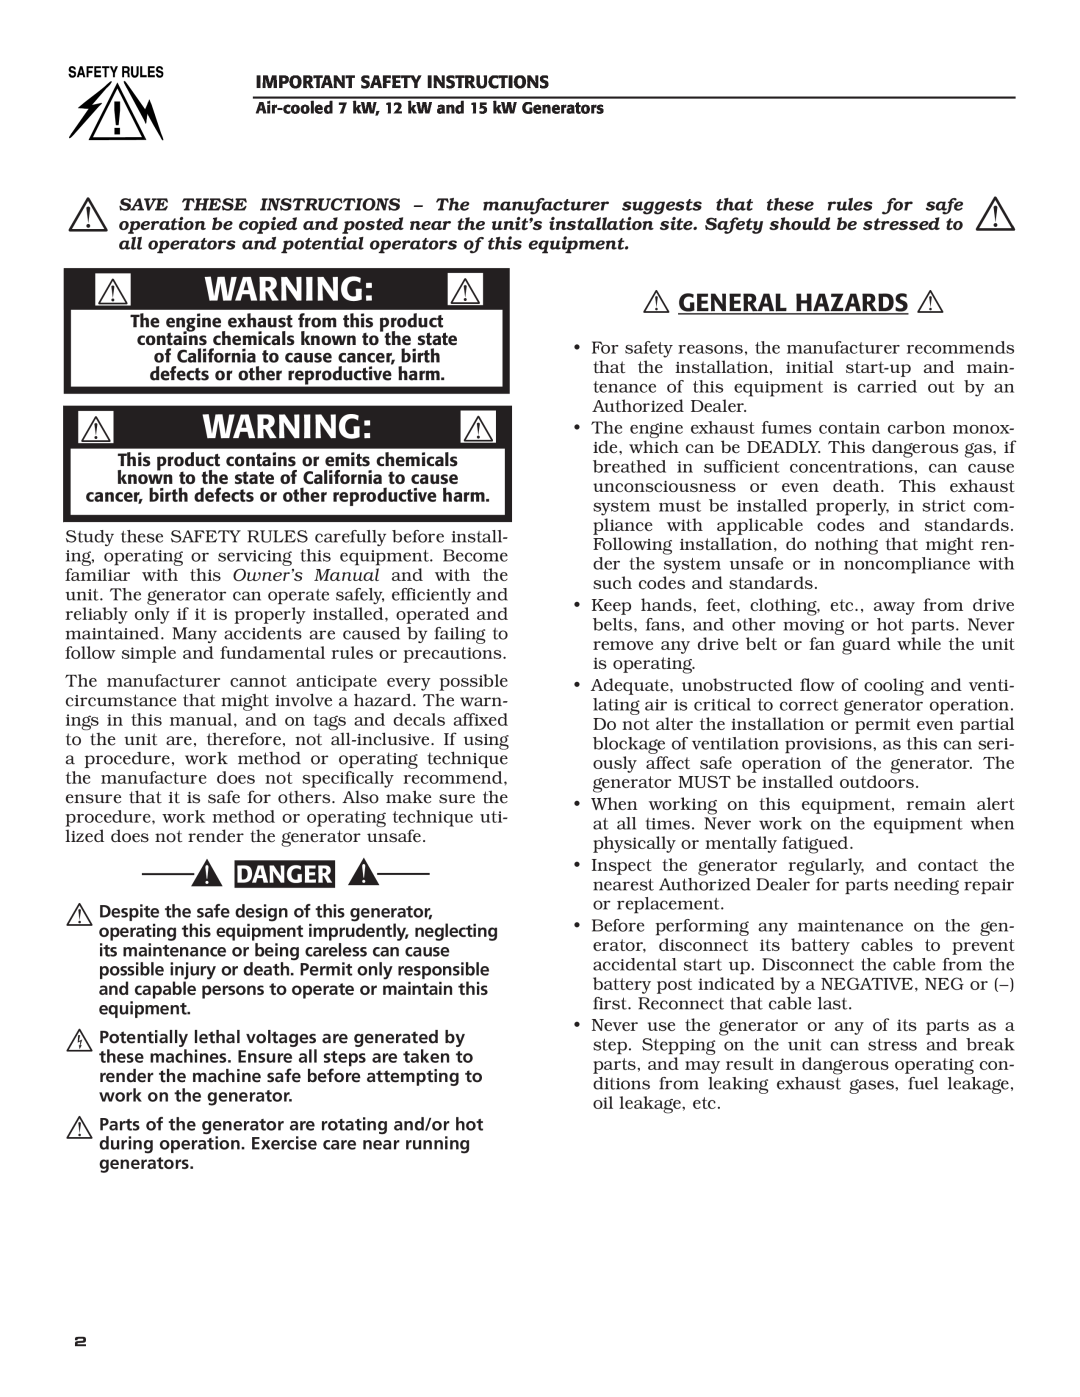 Guardian Technologies 04758-2, 04760-2, 04759-2  General Hazards ,  Warning , Danger, Important Safety Instructions 